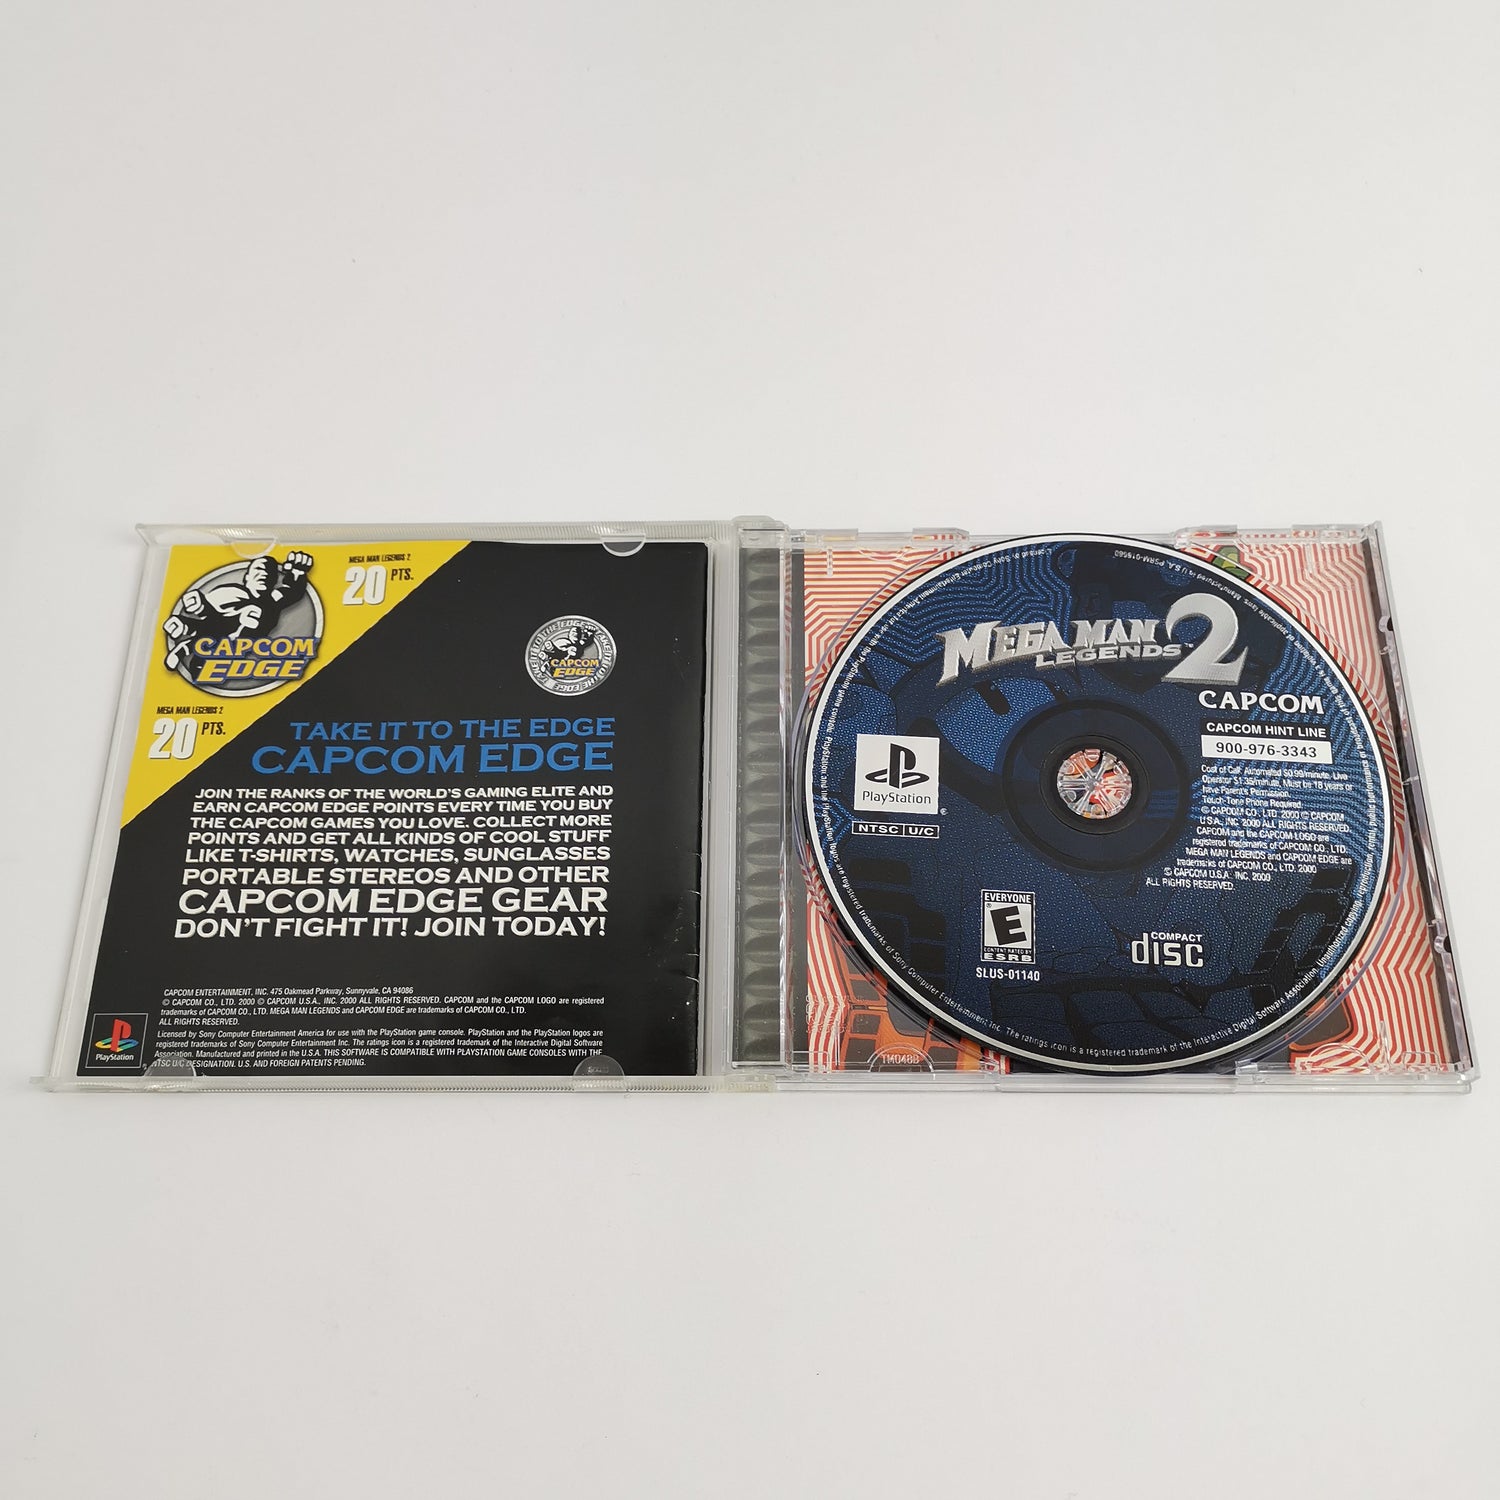 Sony Playstation 1 Game : Mega Man Legends 2 | PS1 PSX - OVP NTSC-U/C USA